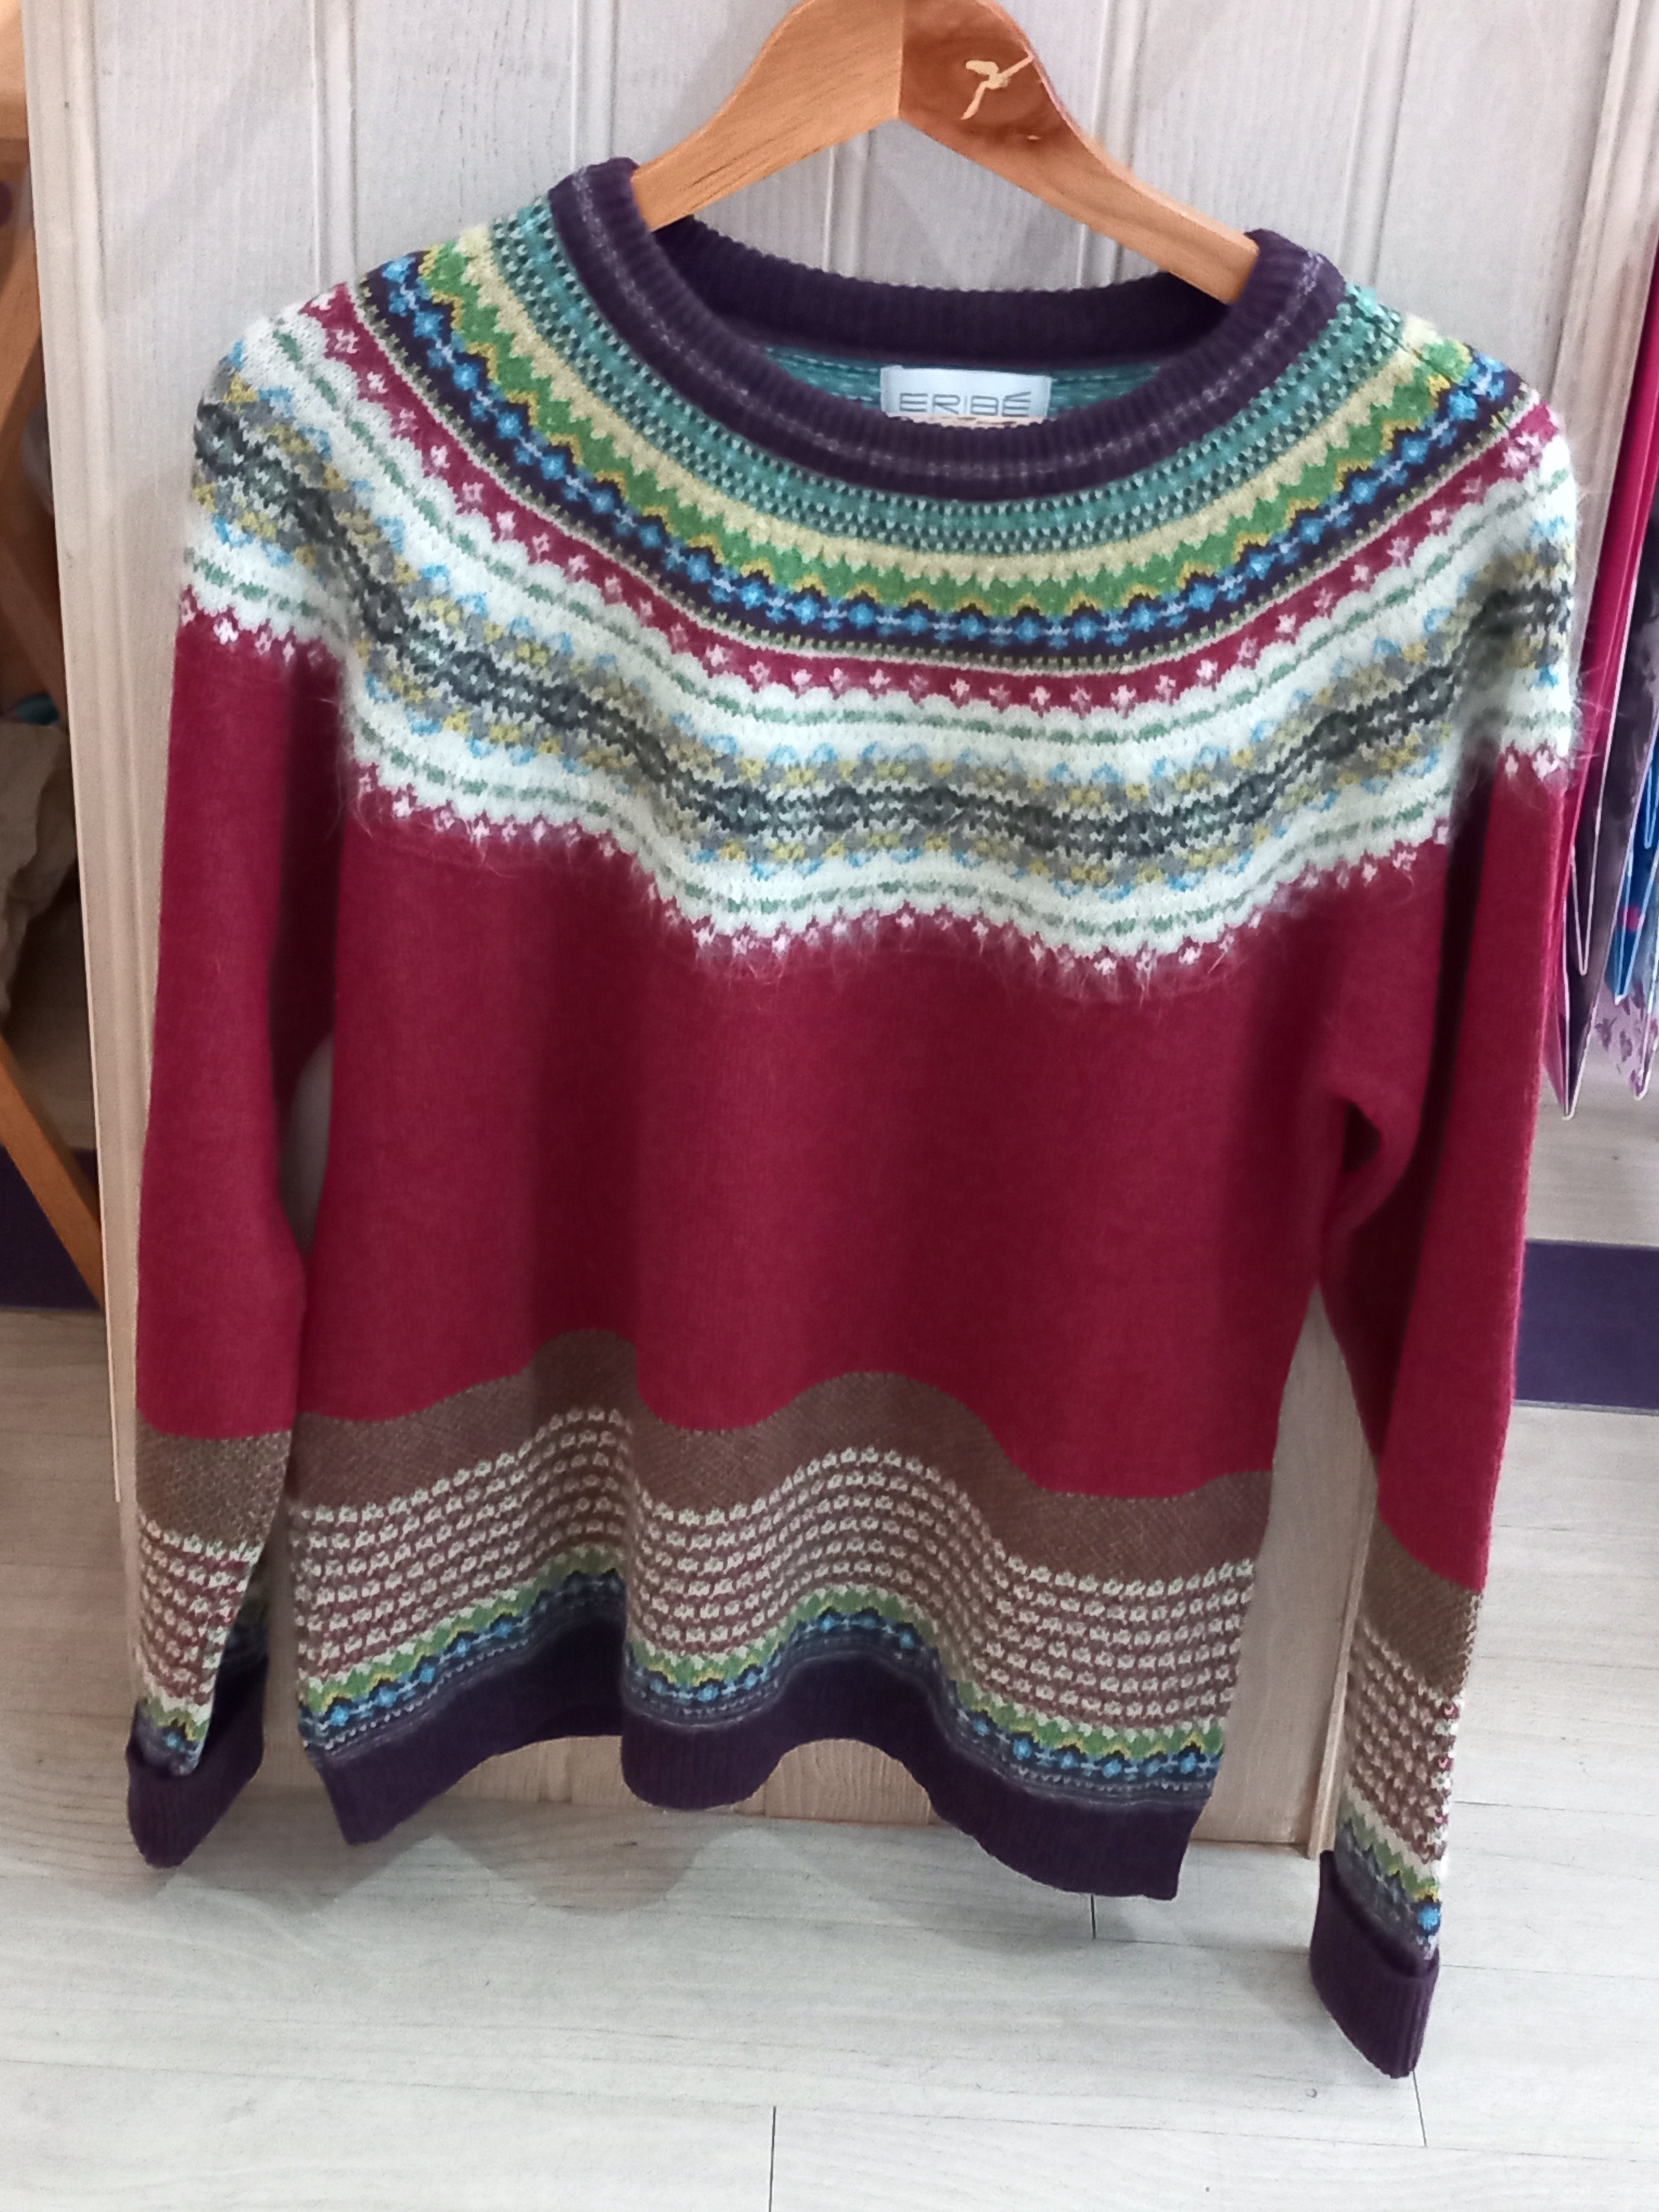 NEW STOCK - HEMLOCK Alpine Sweater 96% Merino Lambswool / 4% Angora designed by ERIBÉ Knitwear